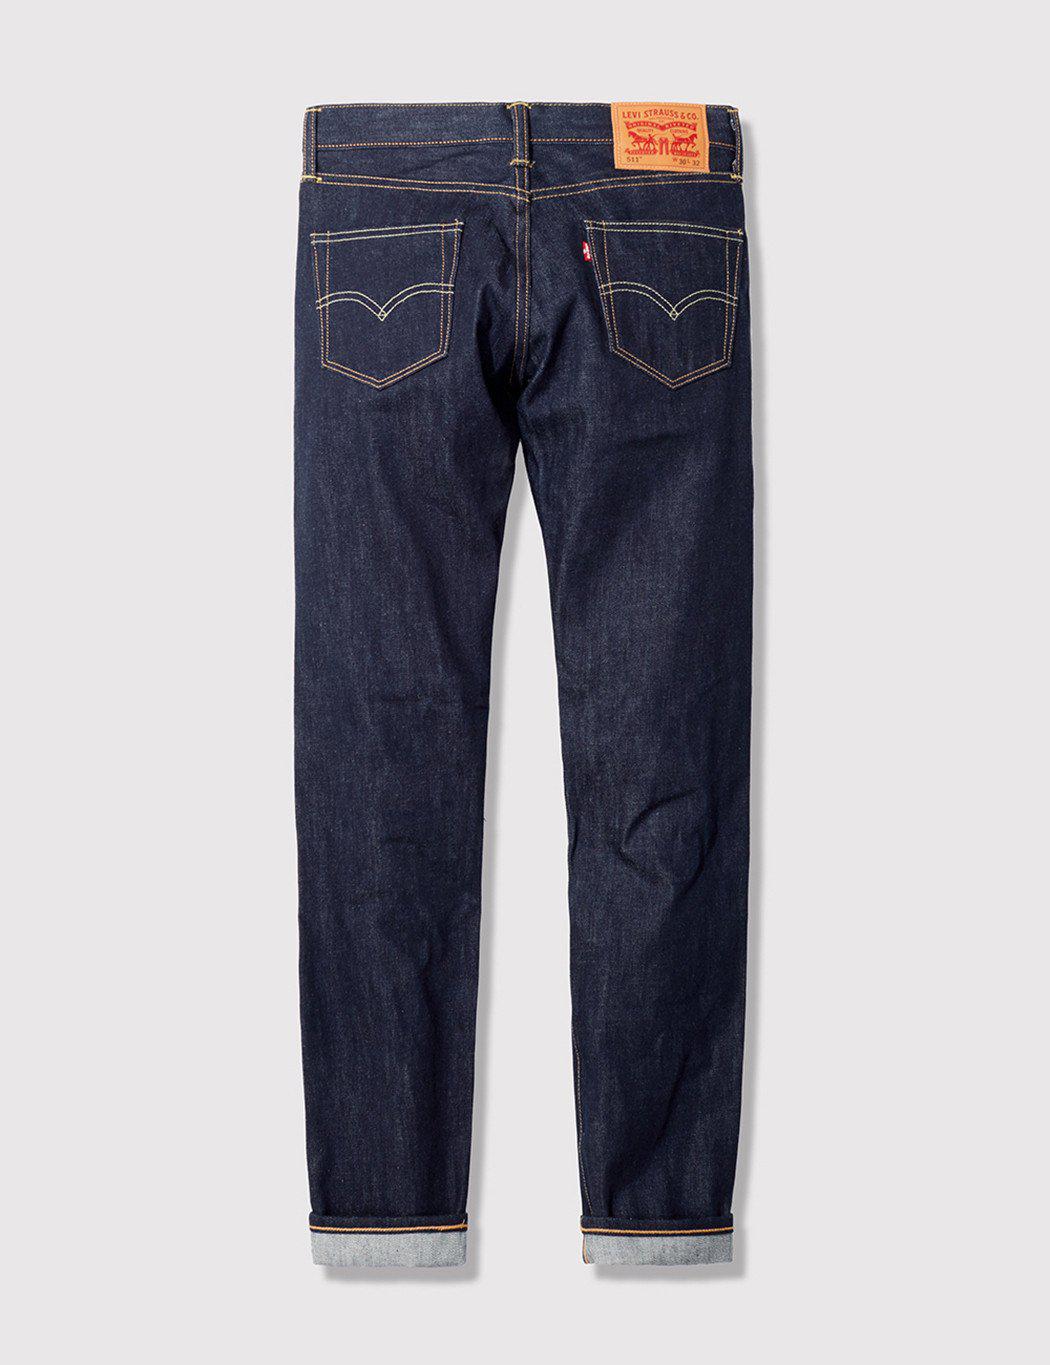 Lyst - Levi's 511 Selvedge Raw Jeans (slim) in Blue for Men